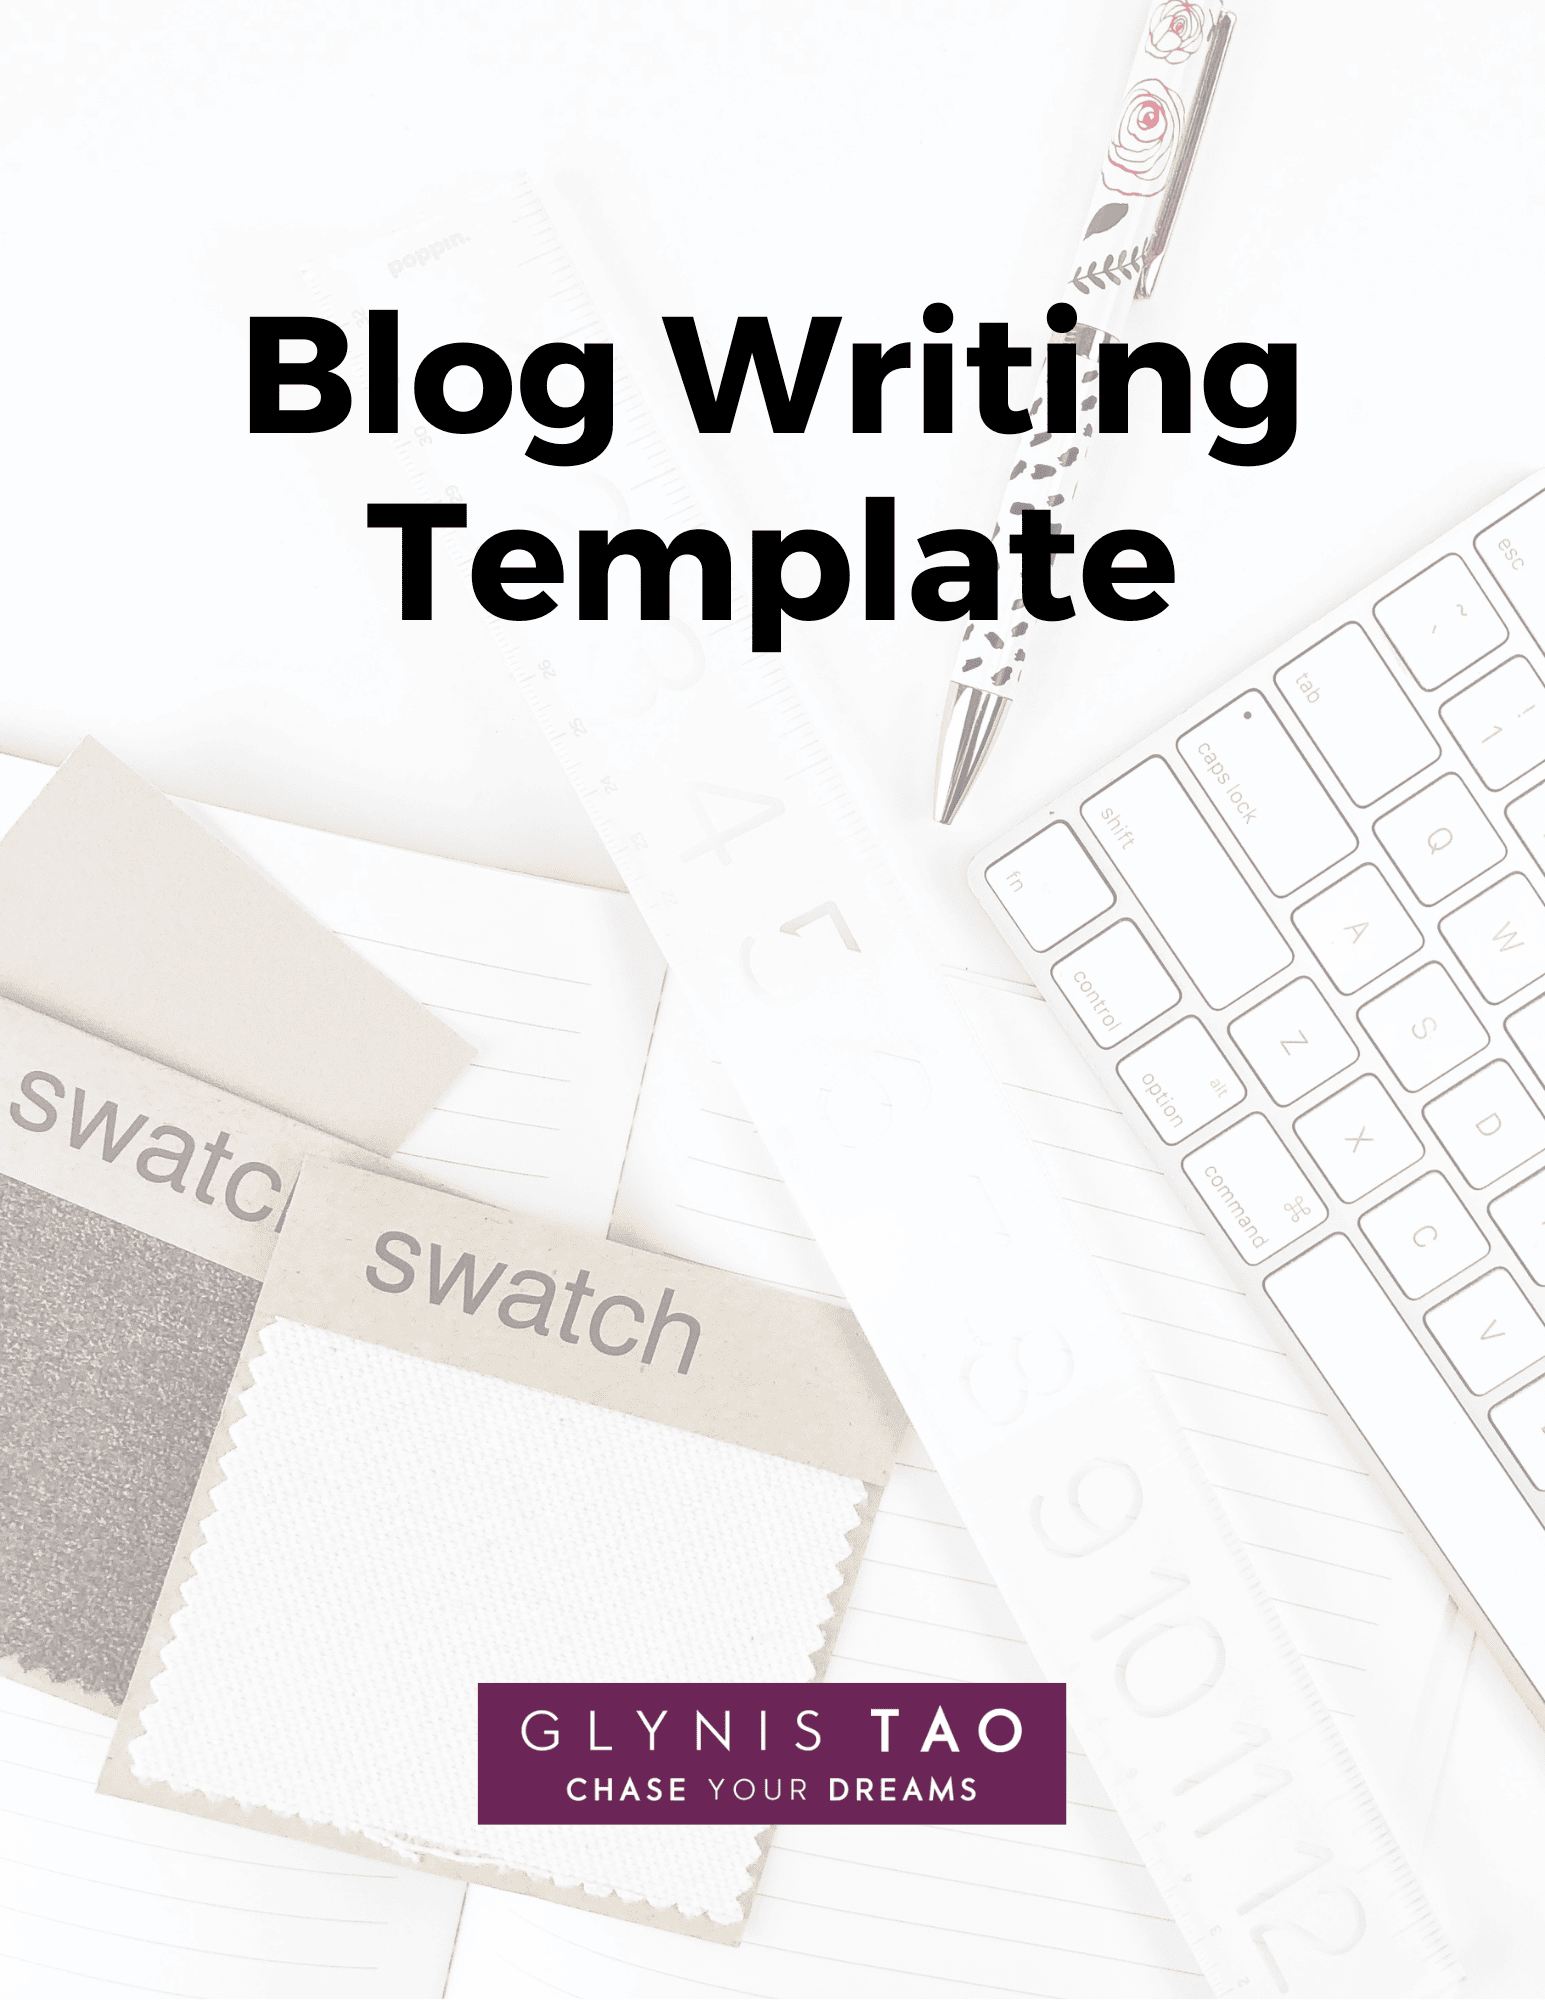 Blog writing template